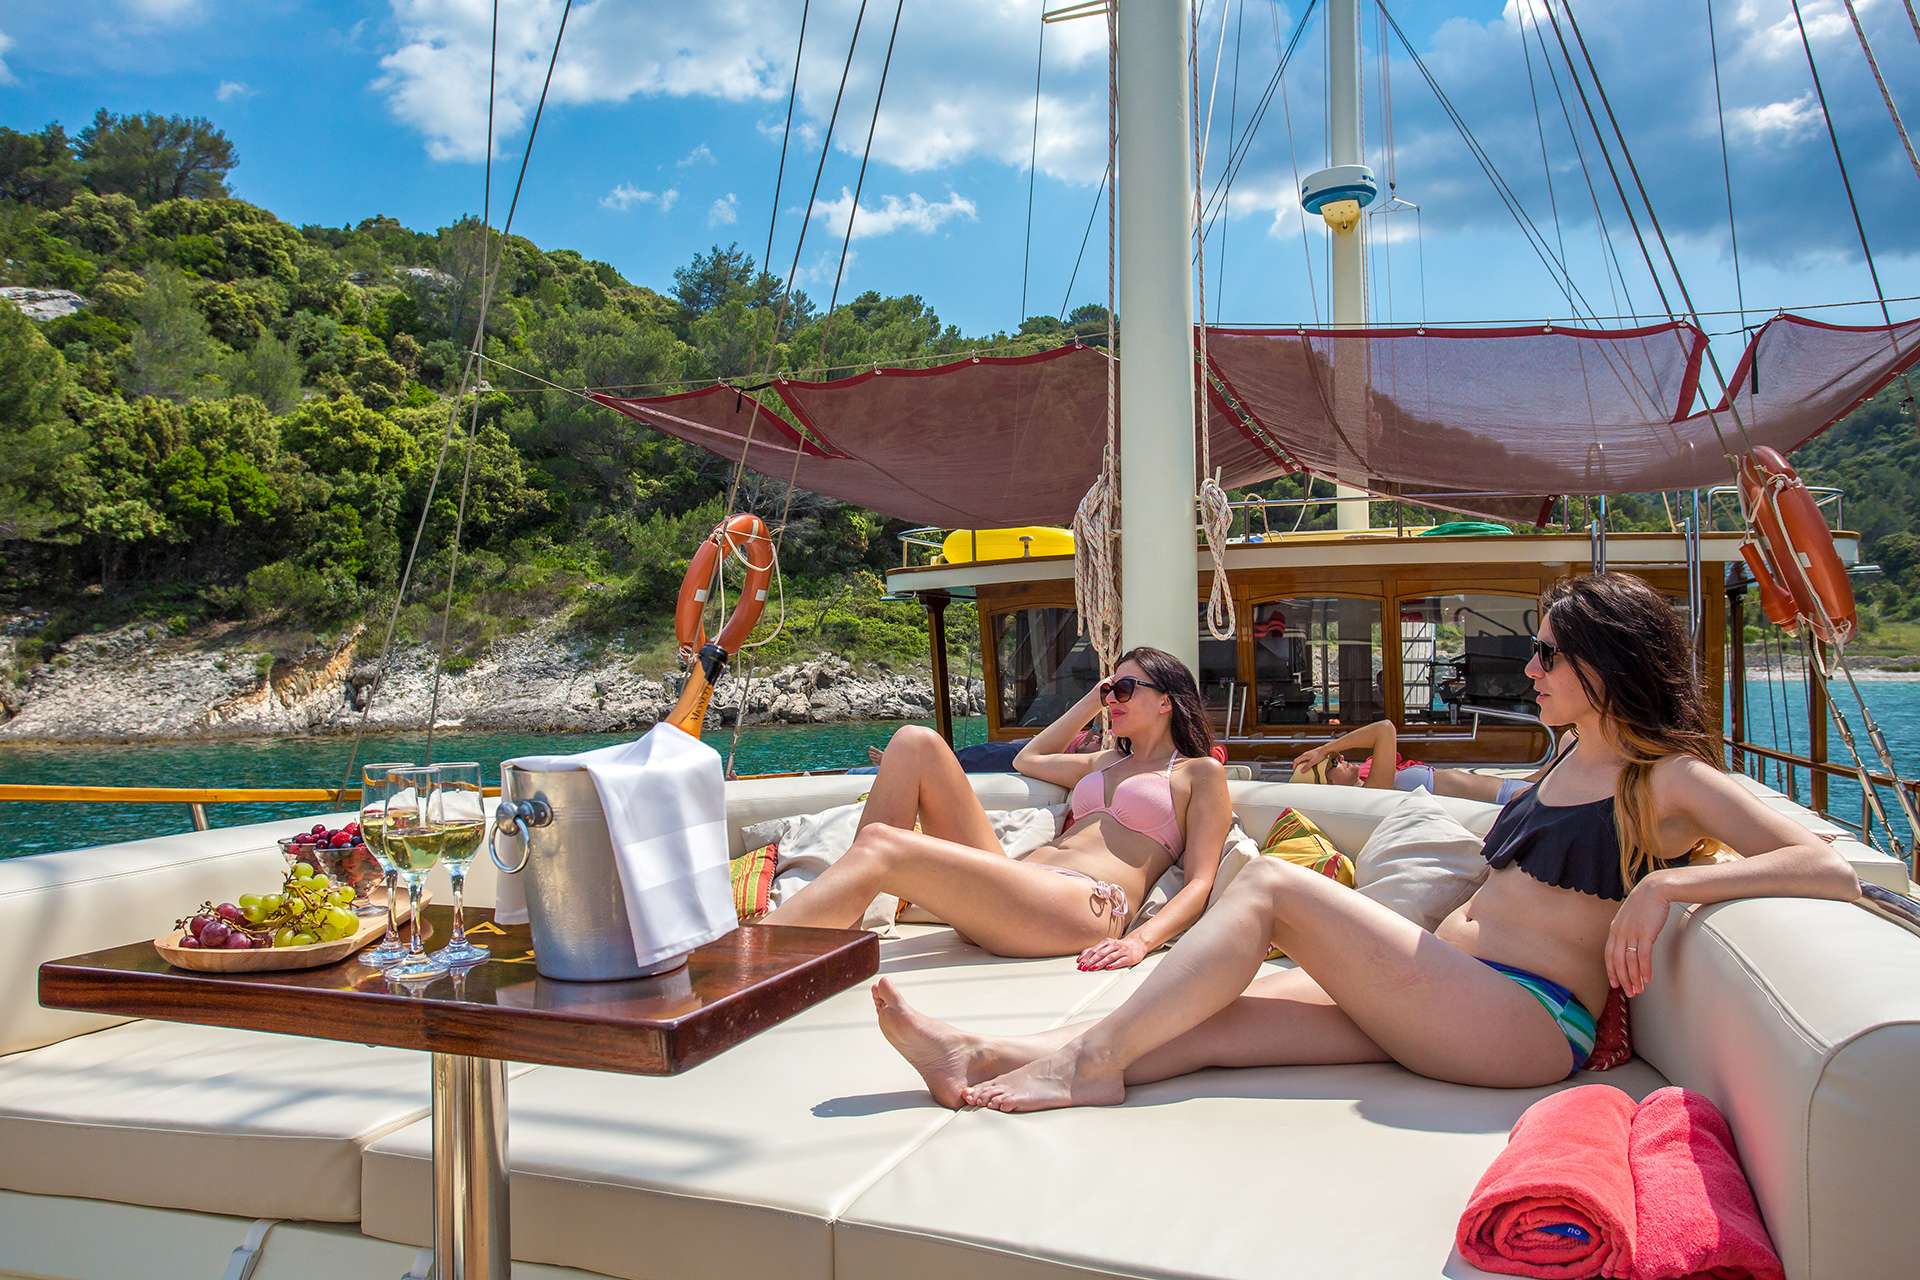 altair - Yacht Charter Brbinj & Boat hire in Croatia 4